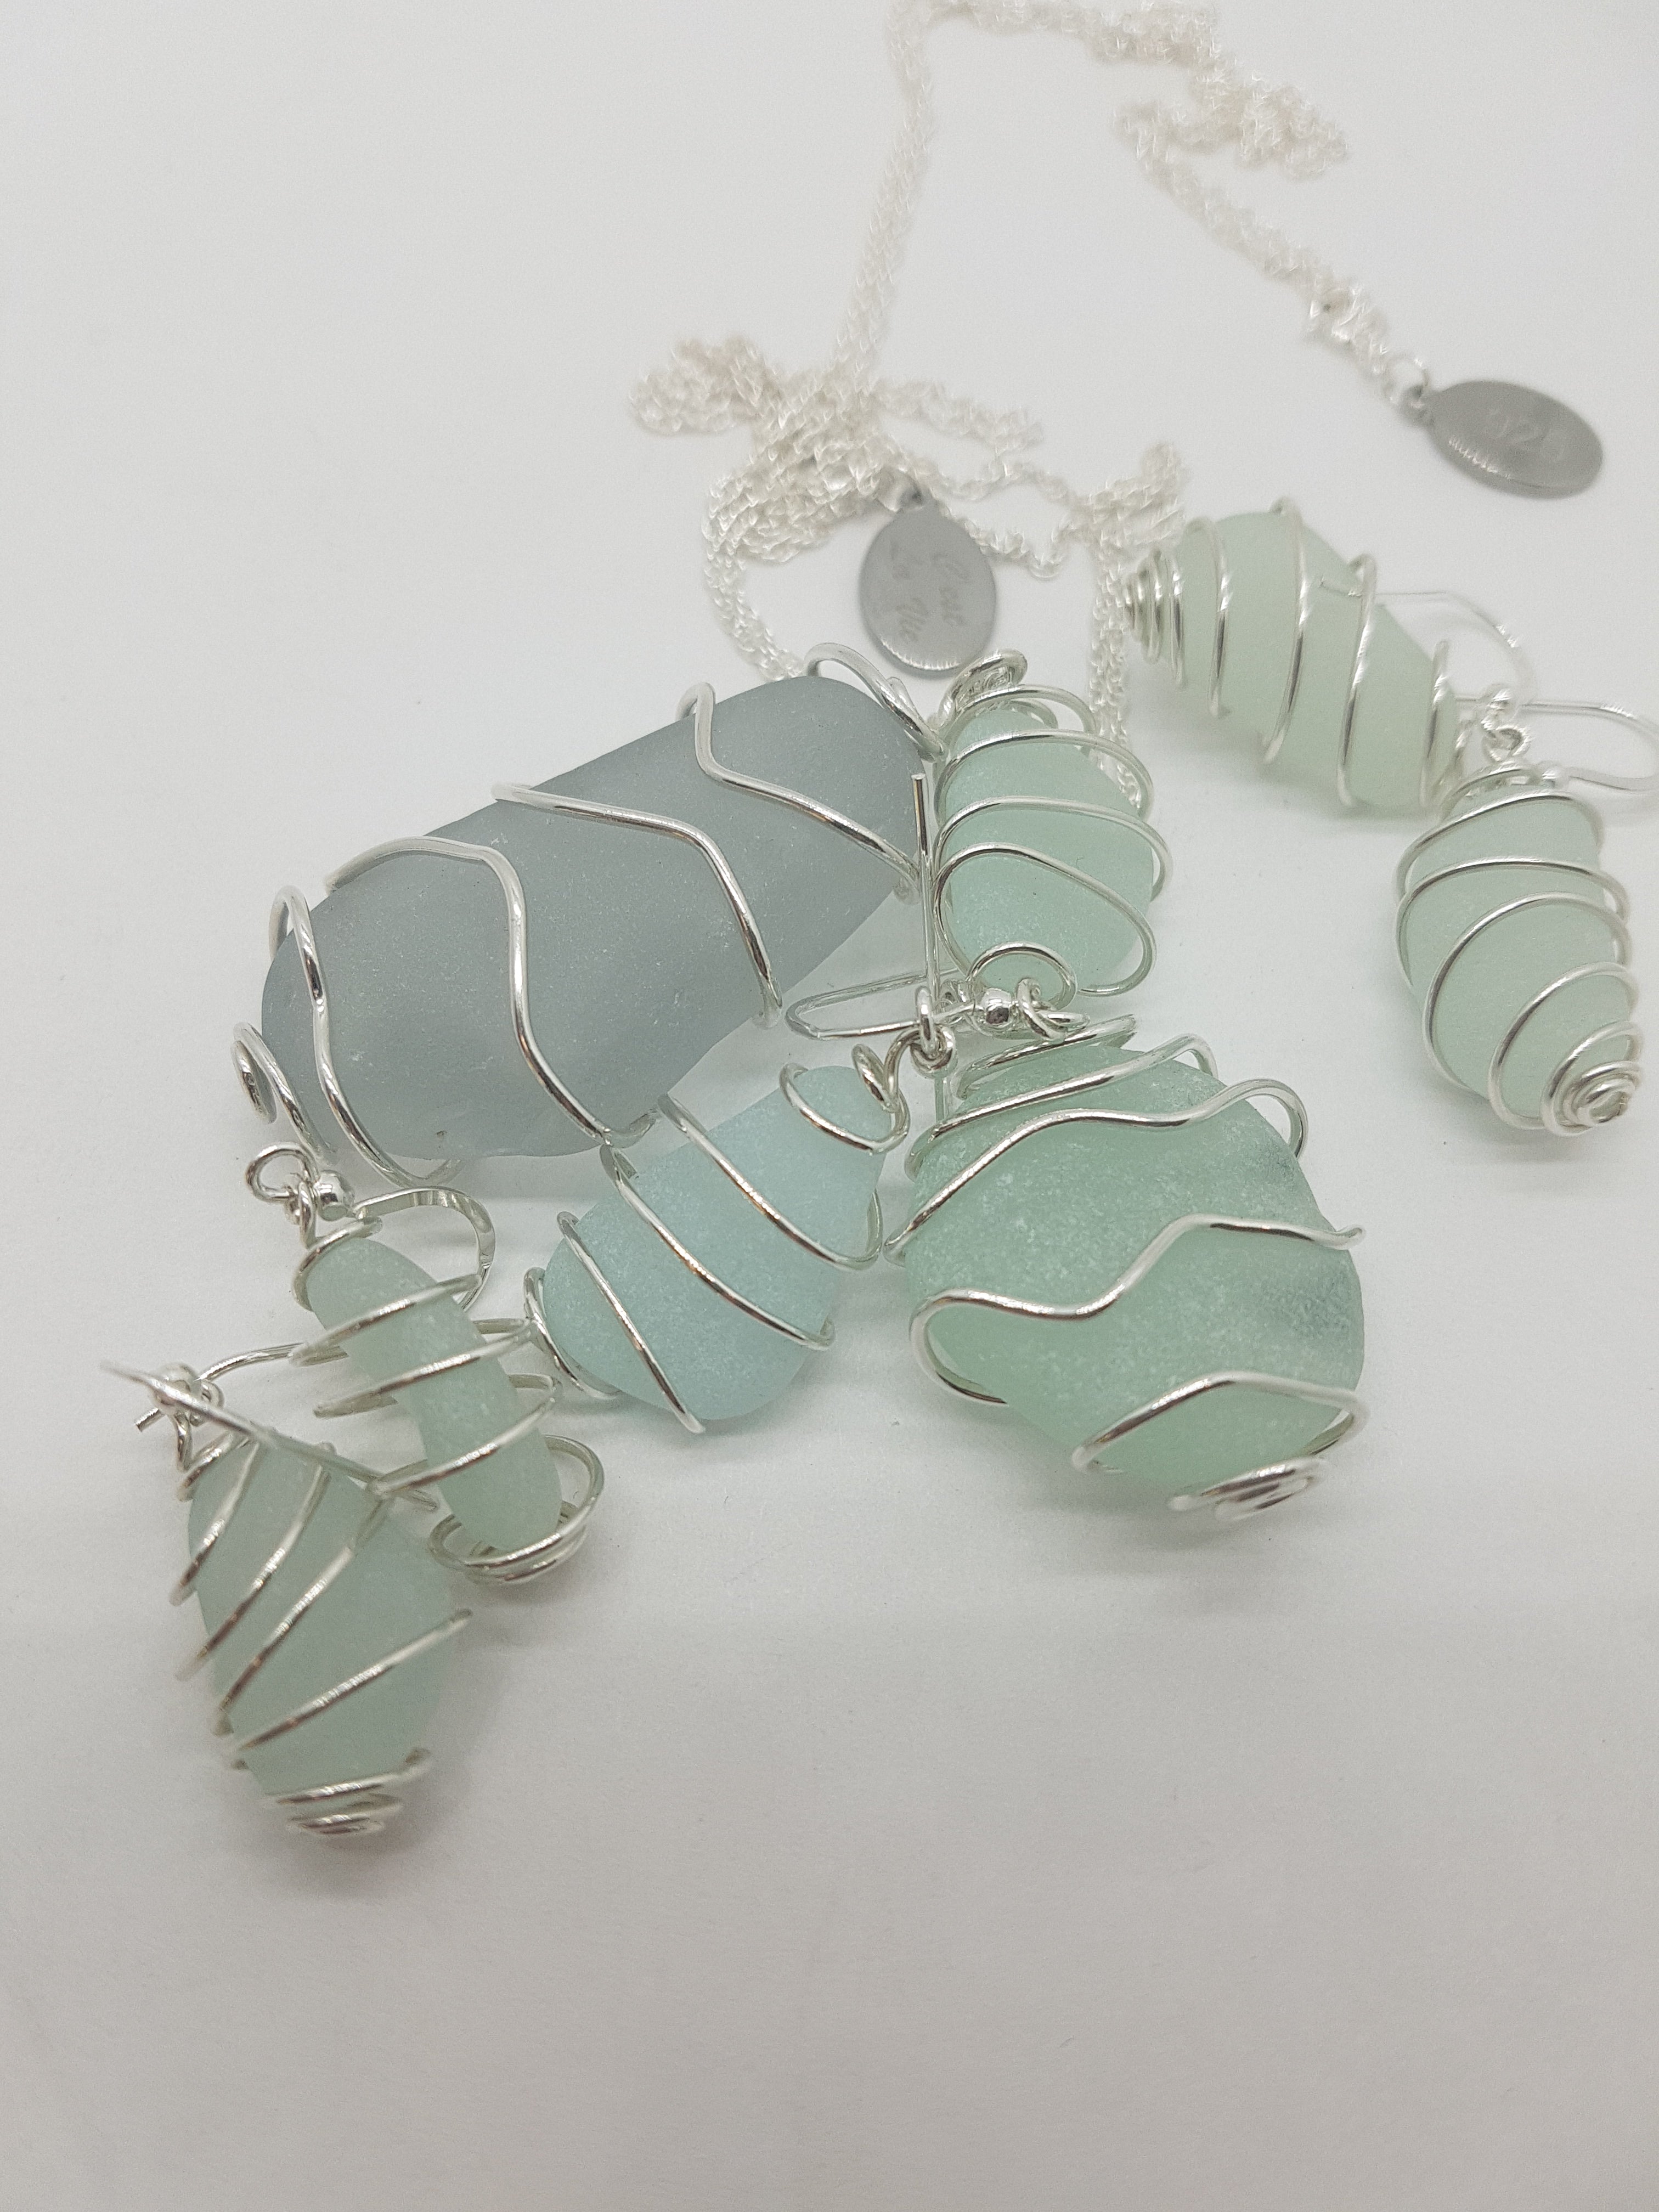 Seaglass and Silver Pendant - Aqua